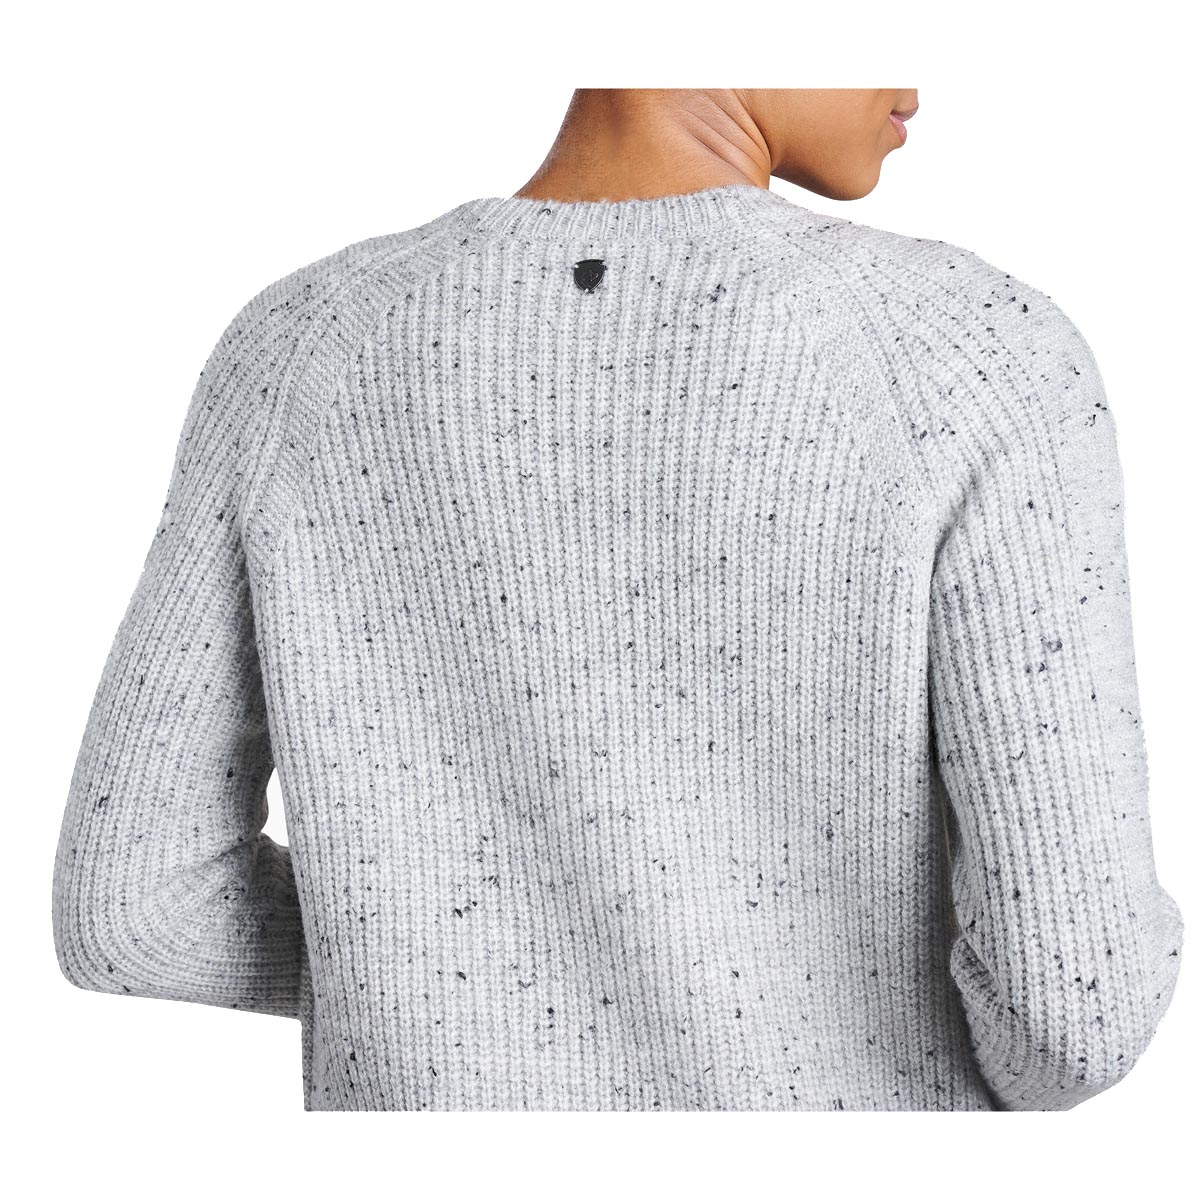 Kuhl Women's Ida Cardigan Sweater